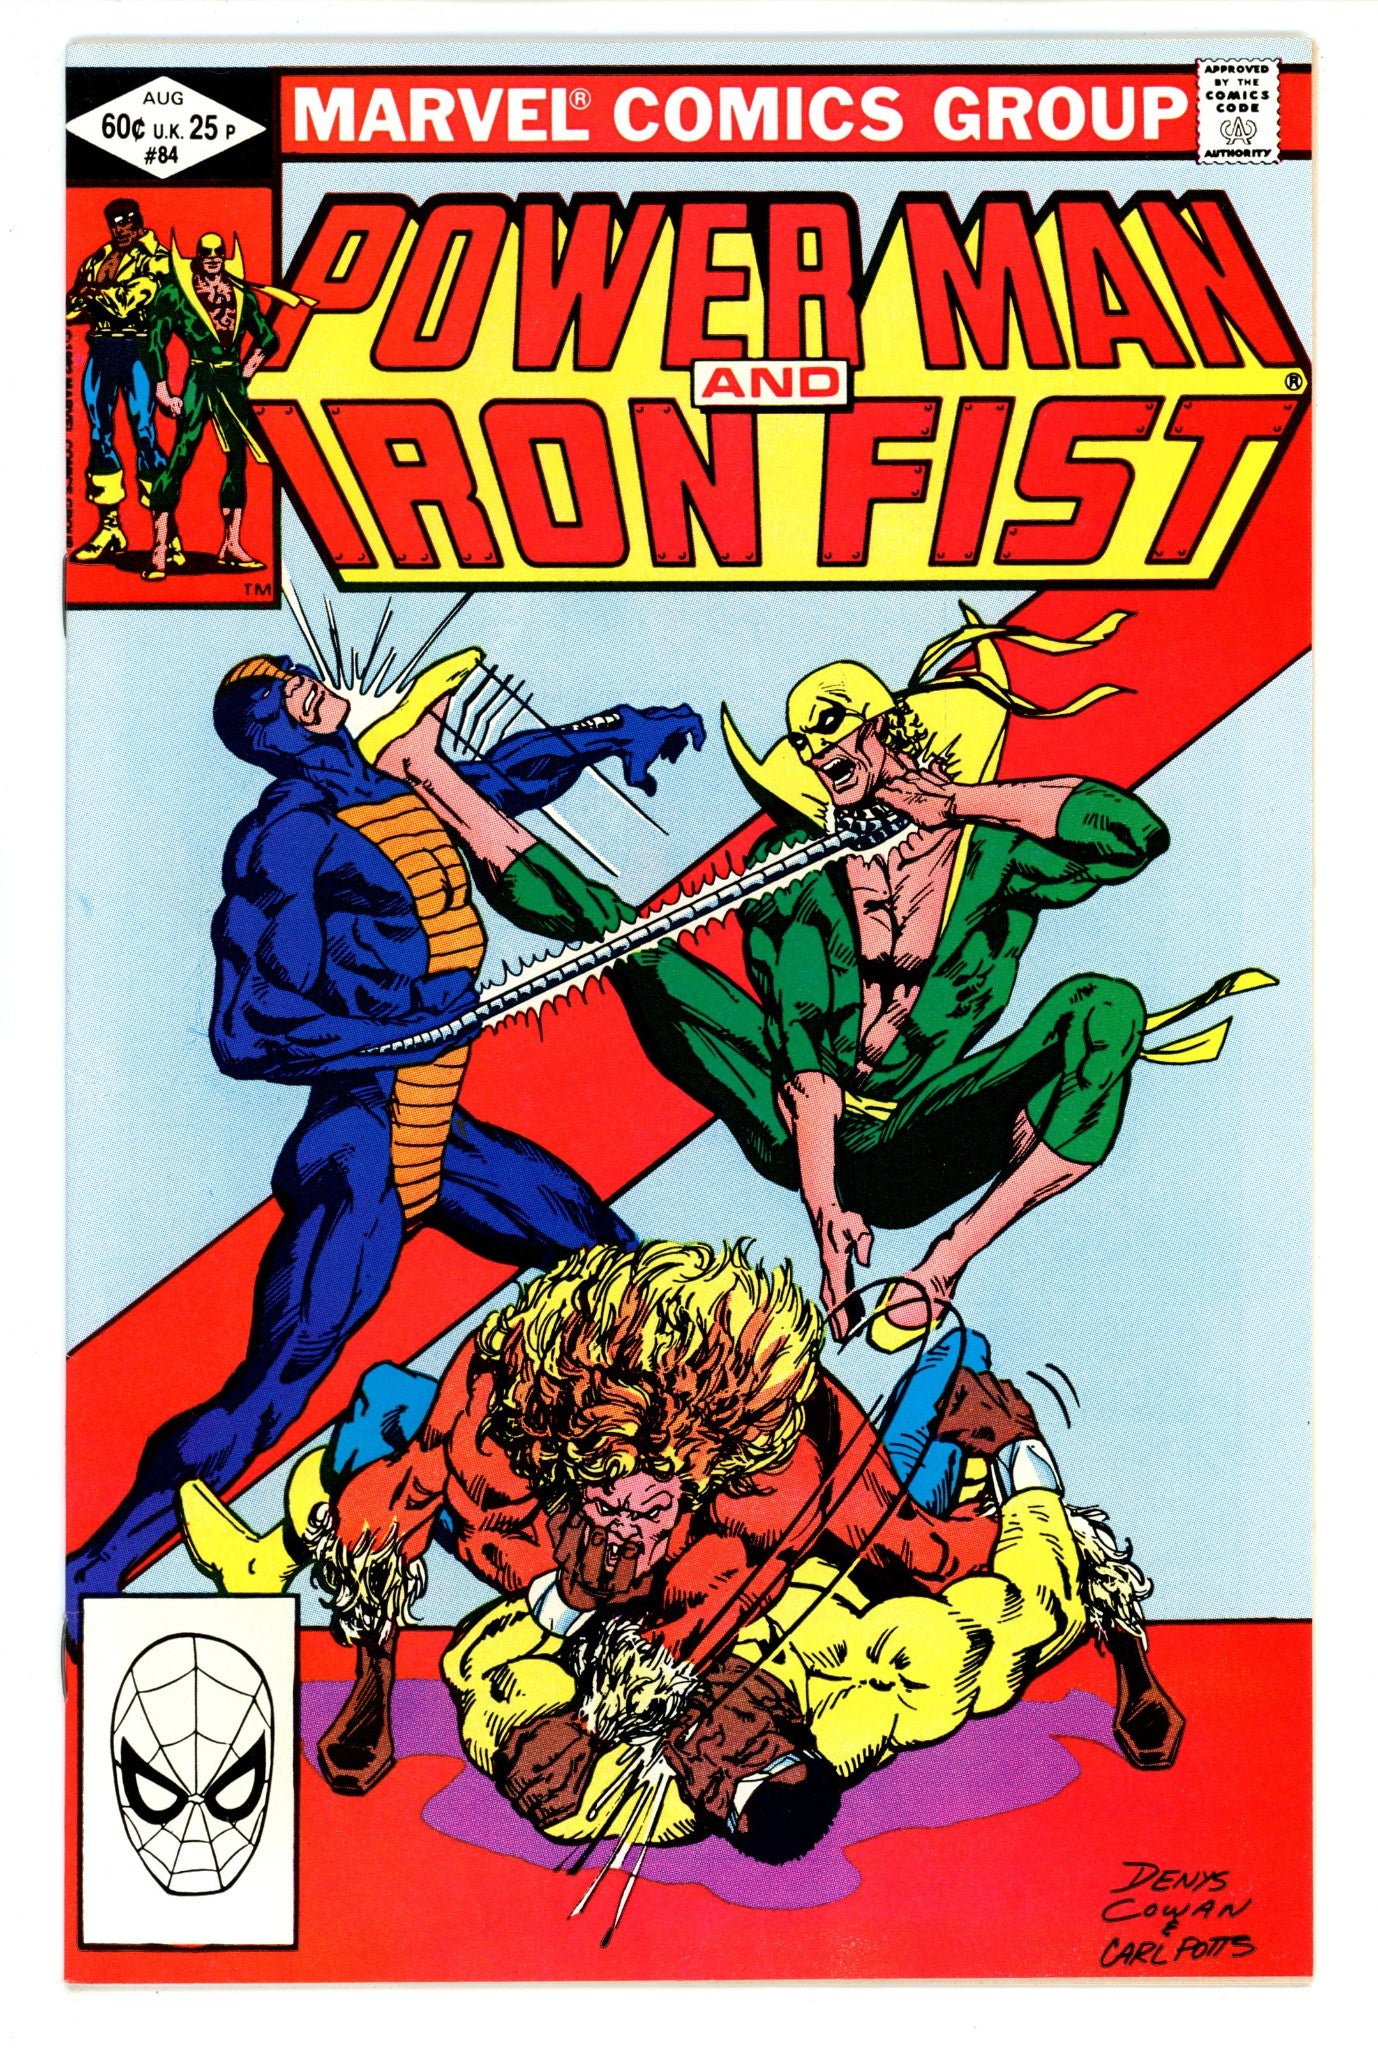 Power Man and Iron Fist Vol 1 84 VF (8.0) (1982) 